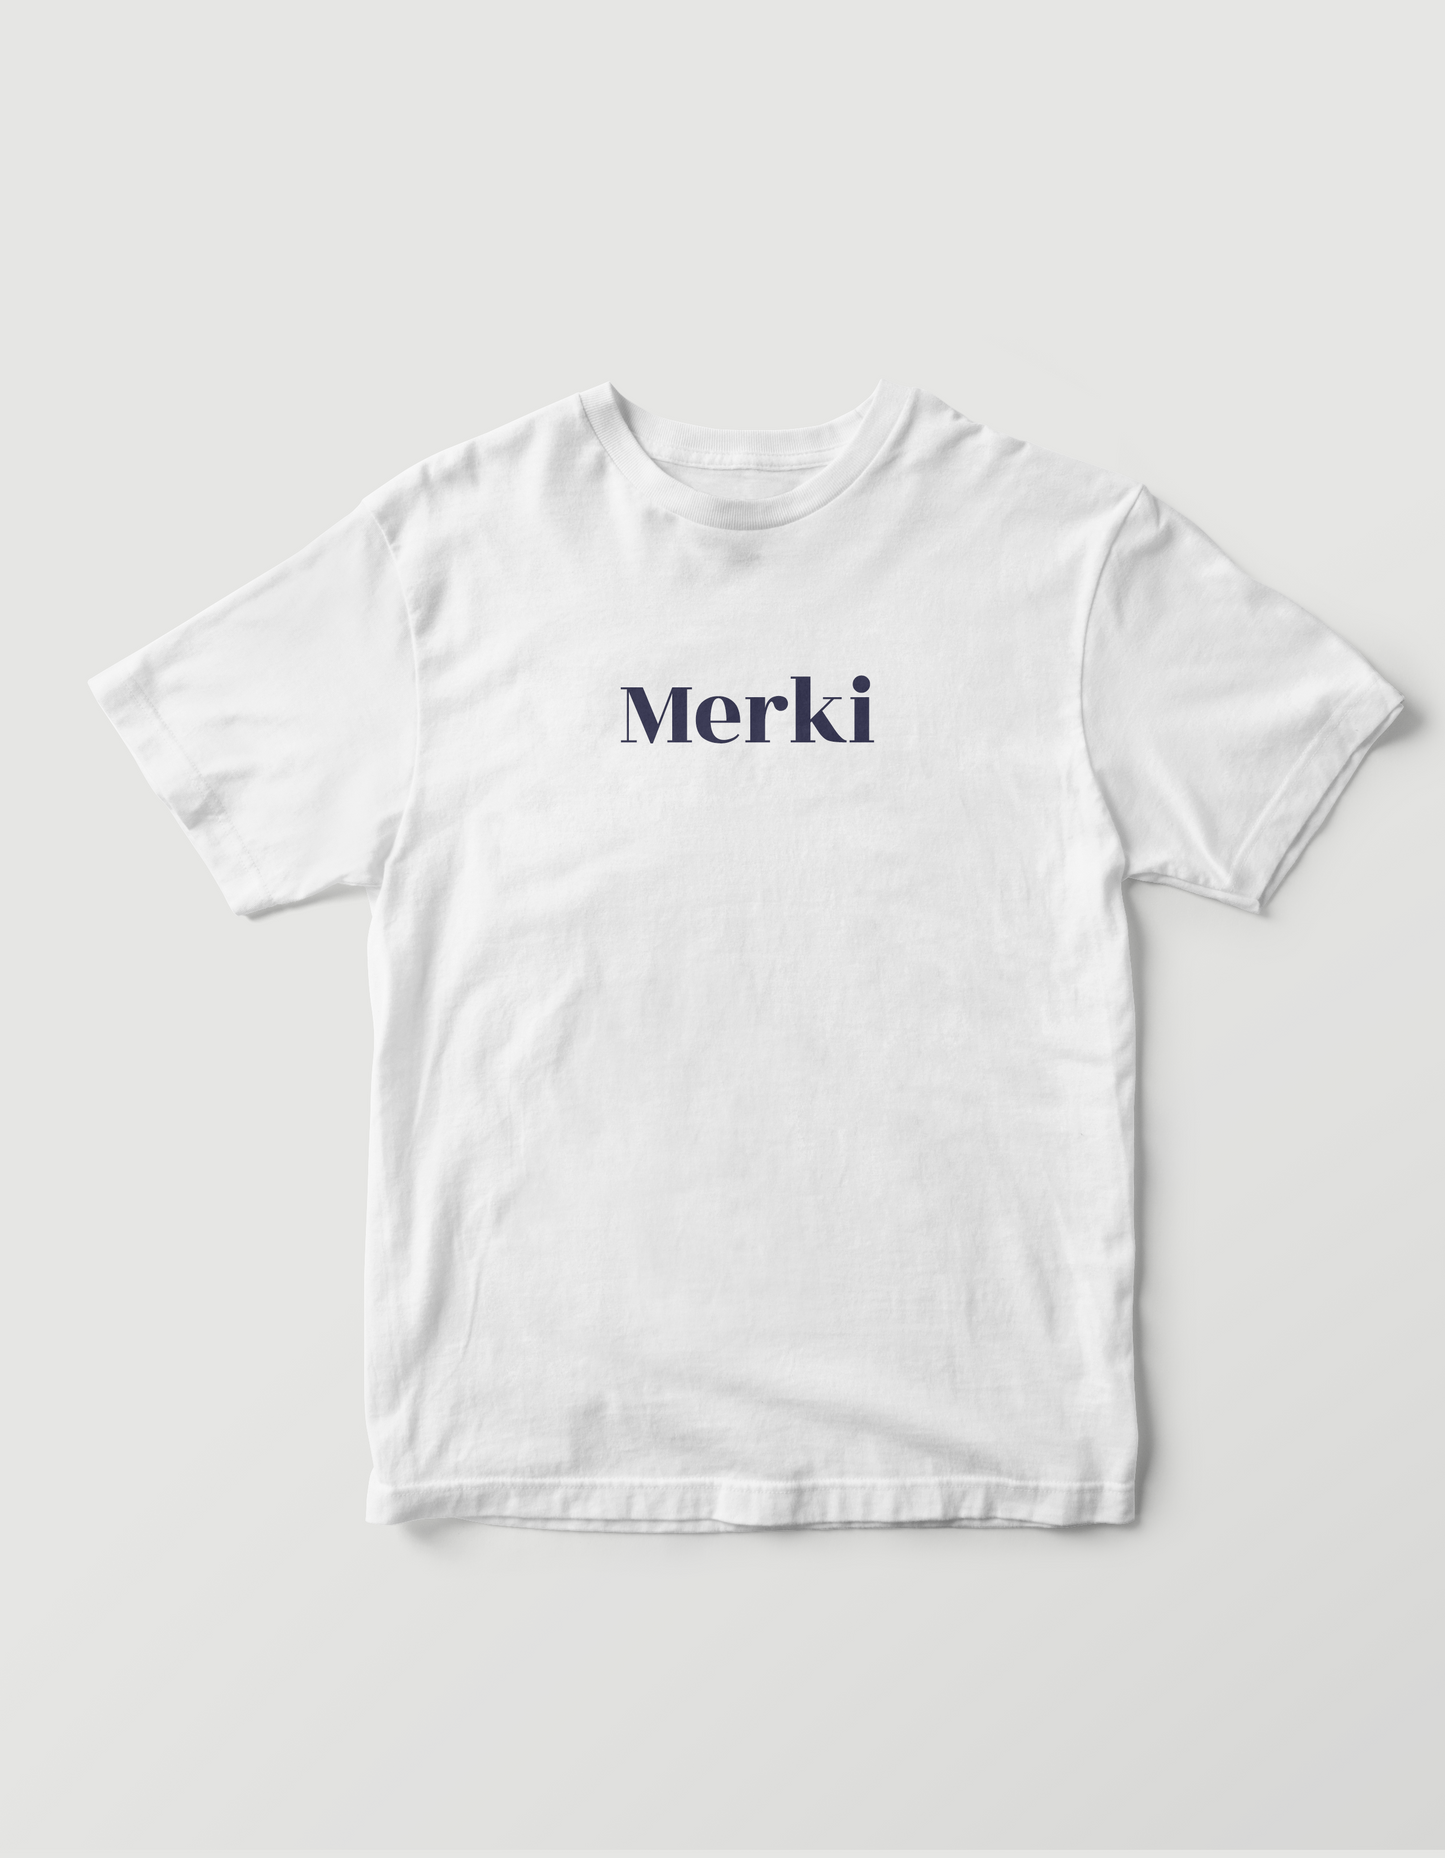 Tee-shirt Merki